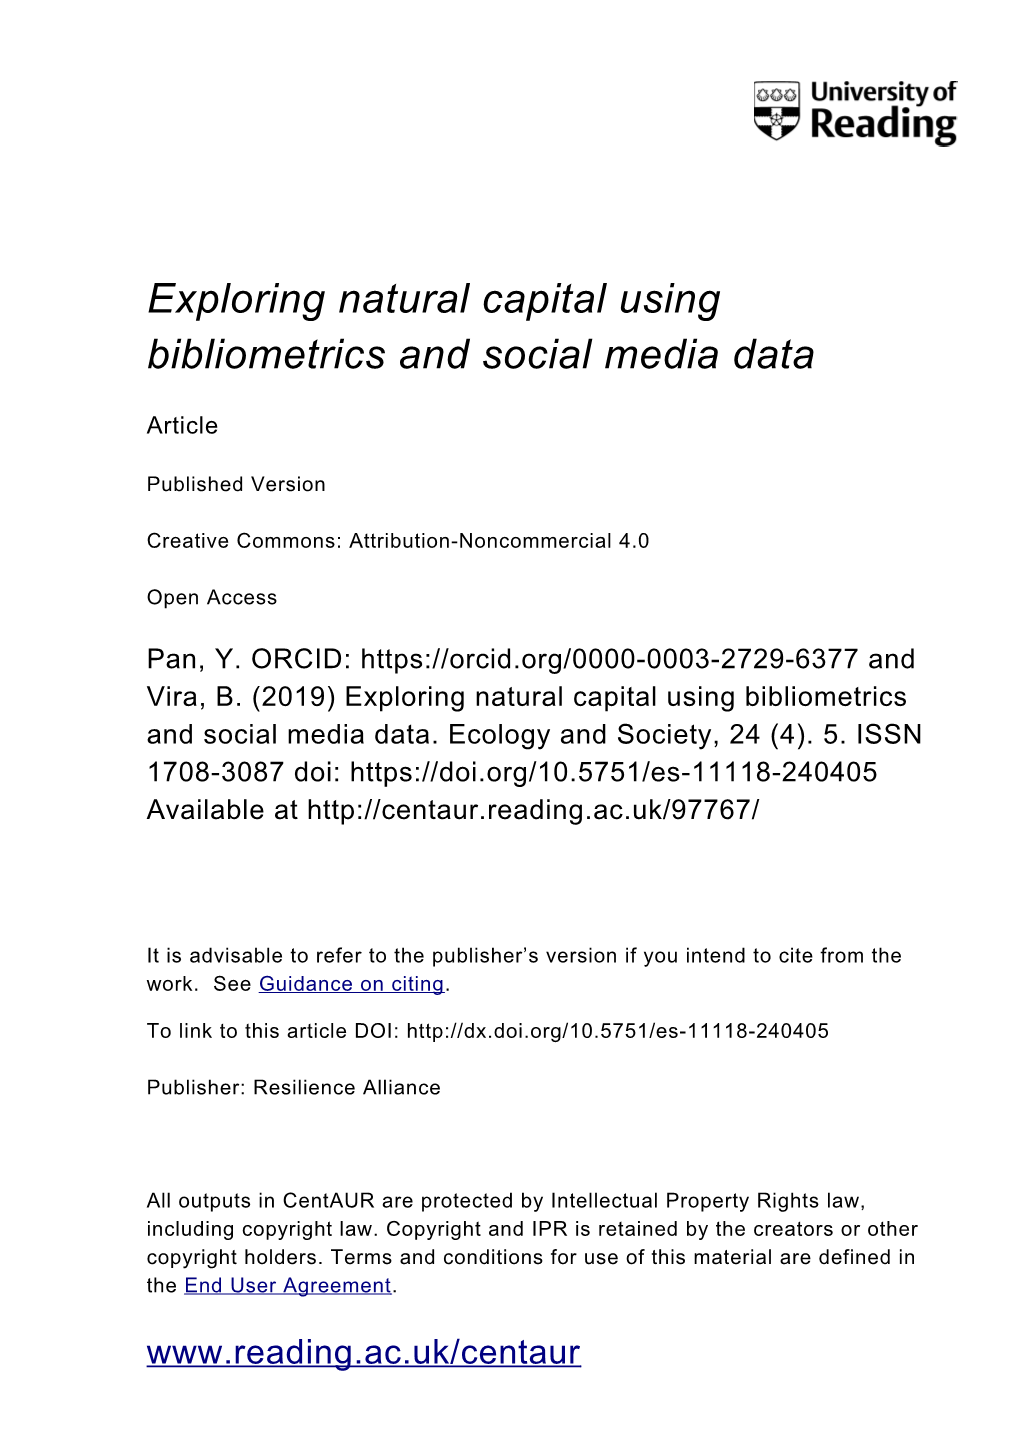 Exploring Natural Capital Using Bibliometrics and Social Media Data